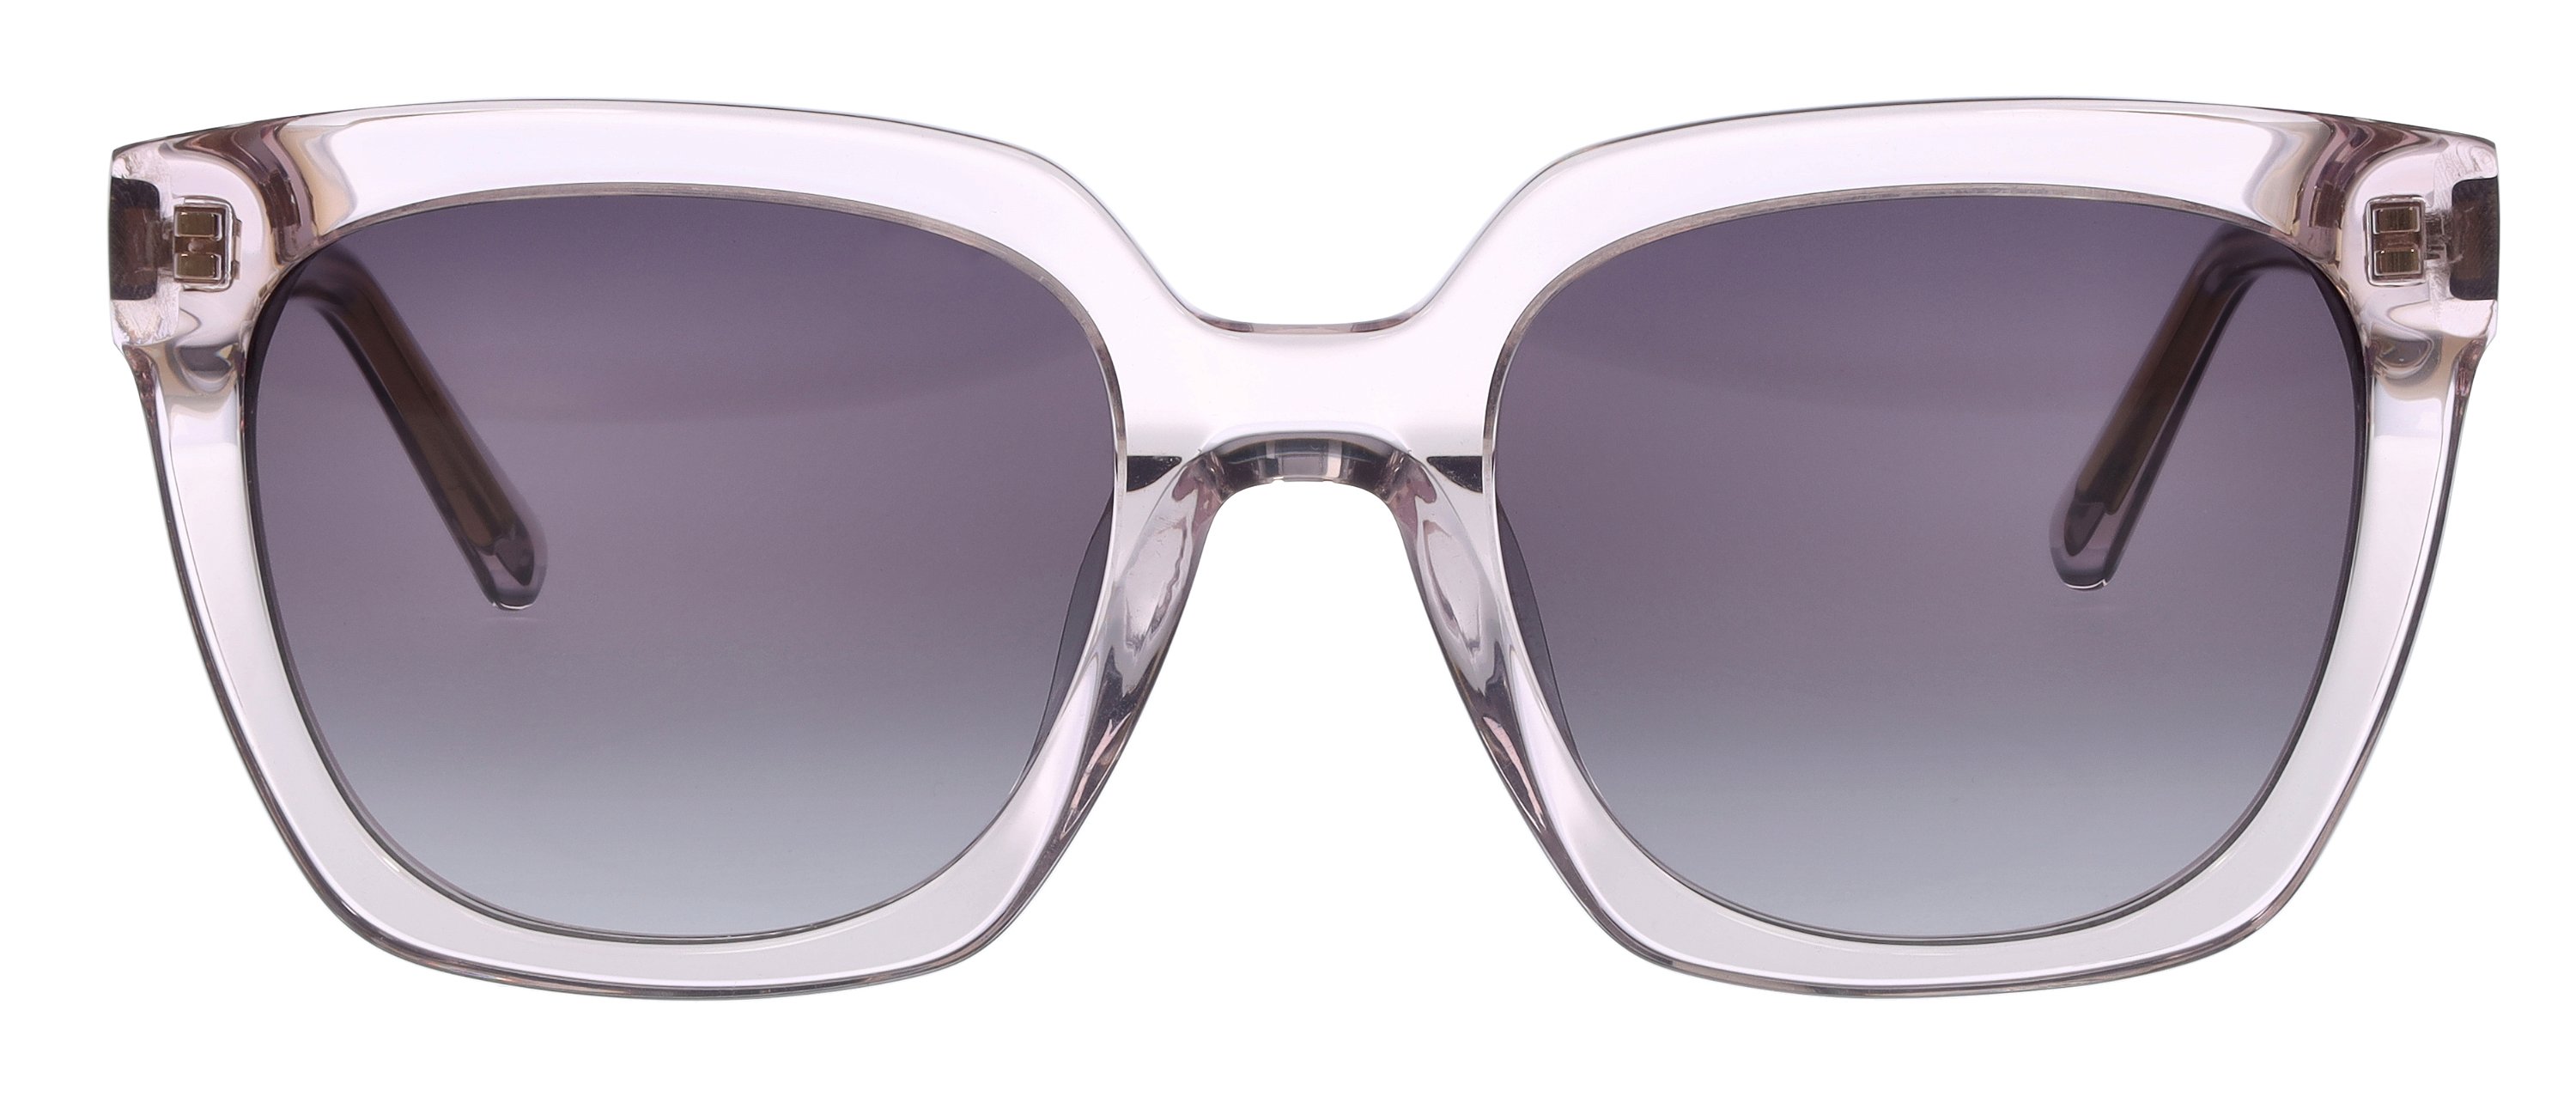 abele optik Sonnenbrille für Damen in lila transparent 720851